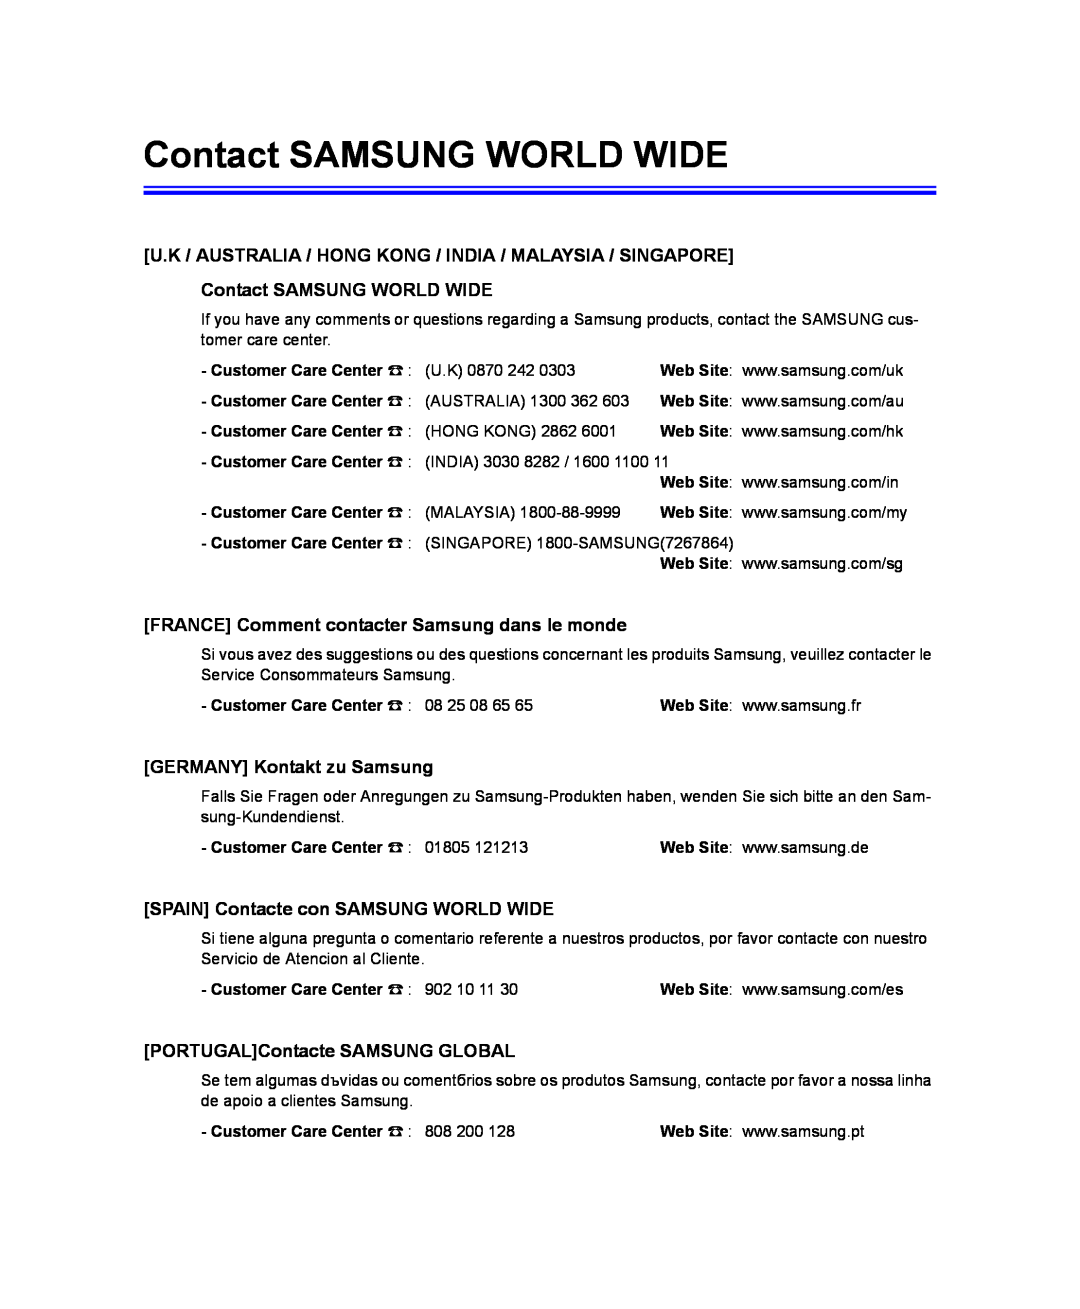 Samsung NP-P60T000/SEG Contact SAMSUNG WORLD WIDE, U.K / Australia / Hong Kong / India / Malaysia / Singapore, Web Site 